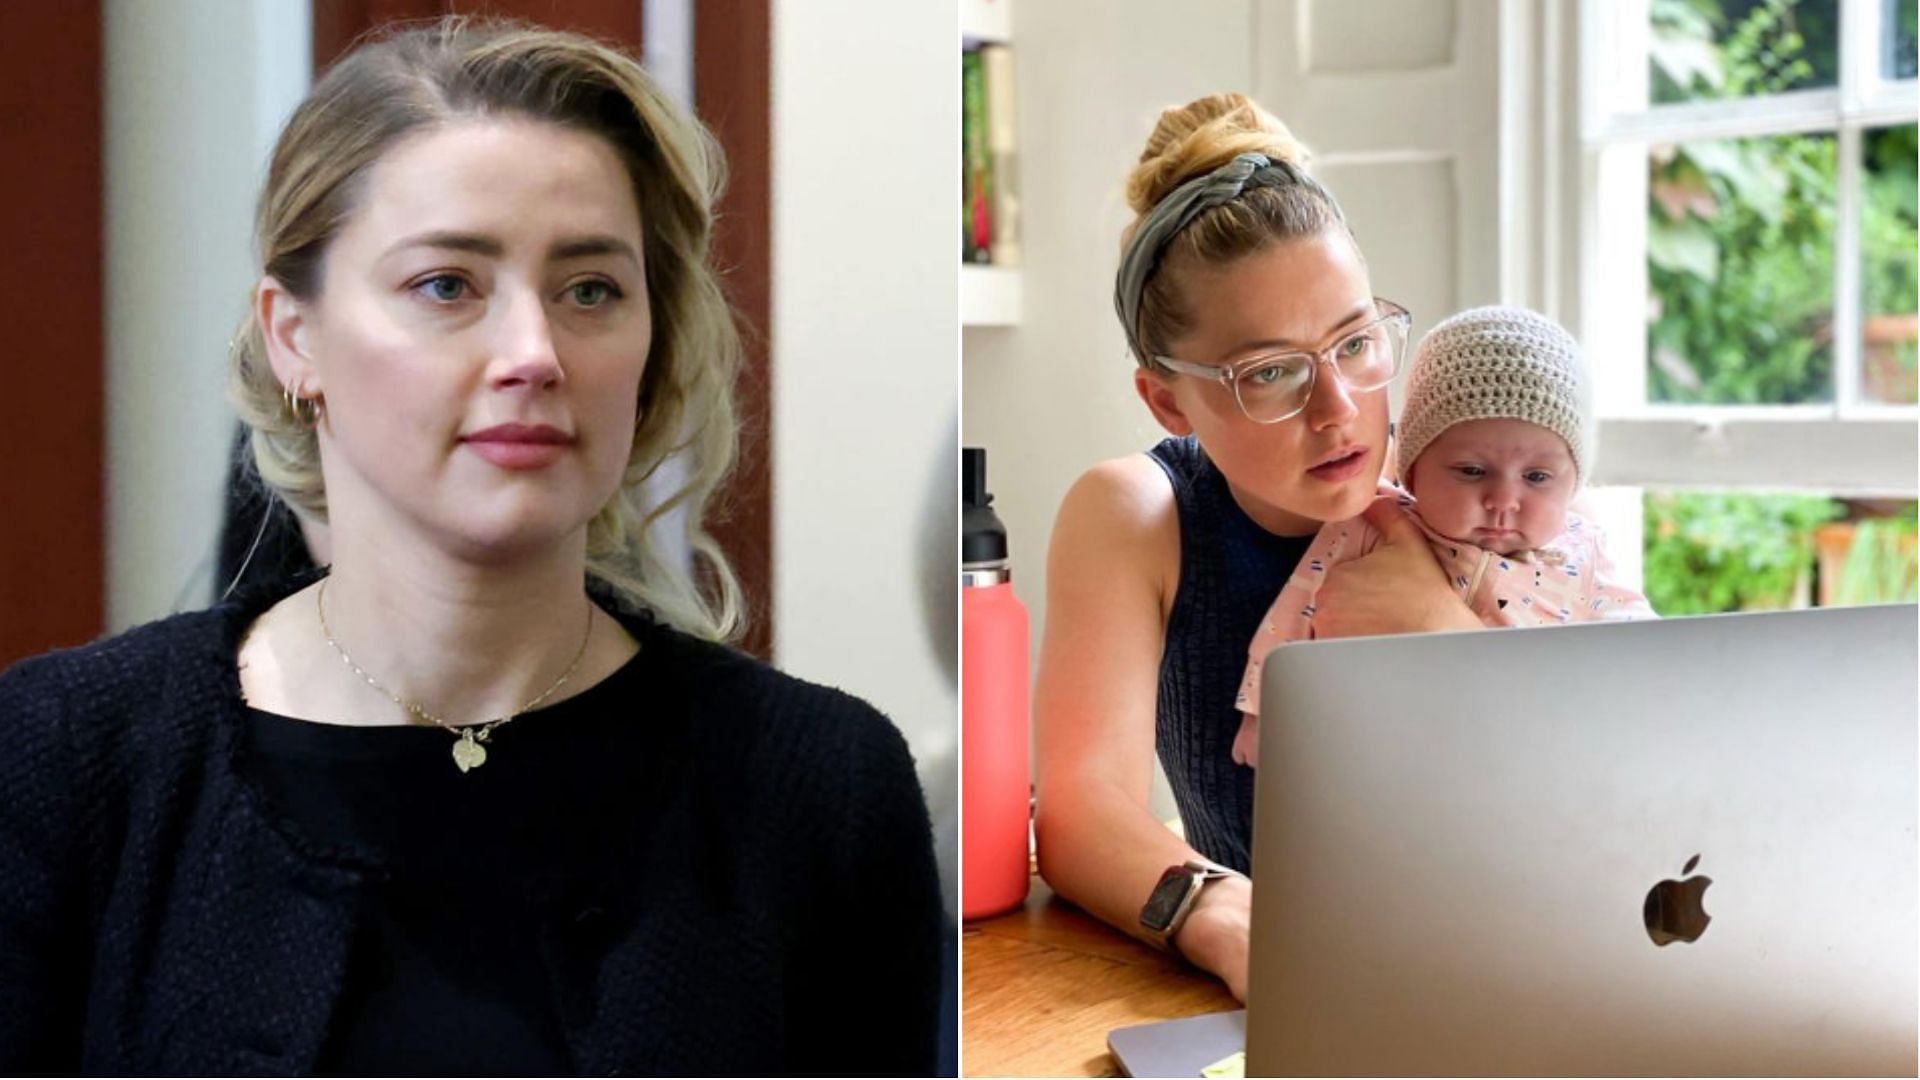 Amber Heard welcomed her daughter Oonagh Paige Heard on April 8, 2021. (Image via Getty Images/Michael Reynolds, Instagram/amberheard)